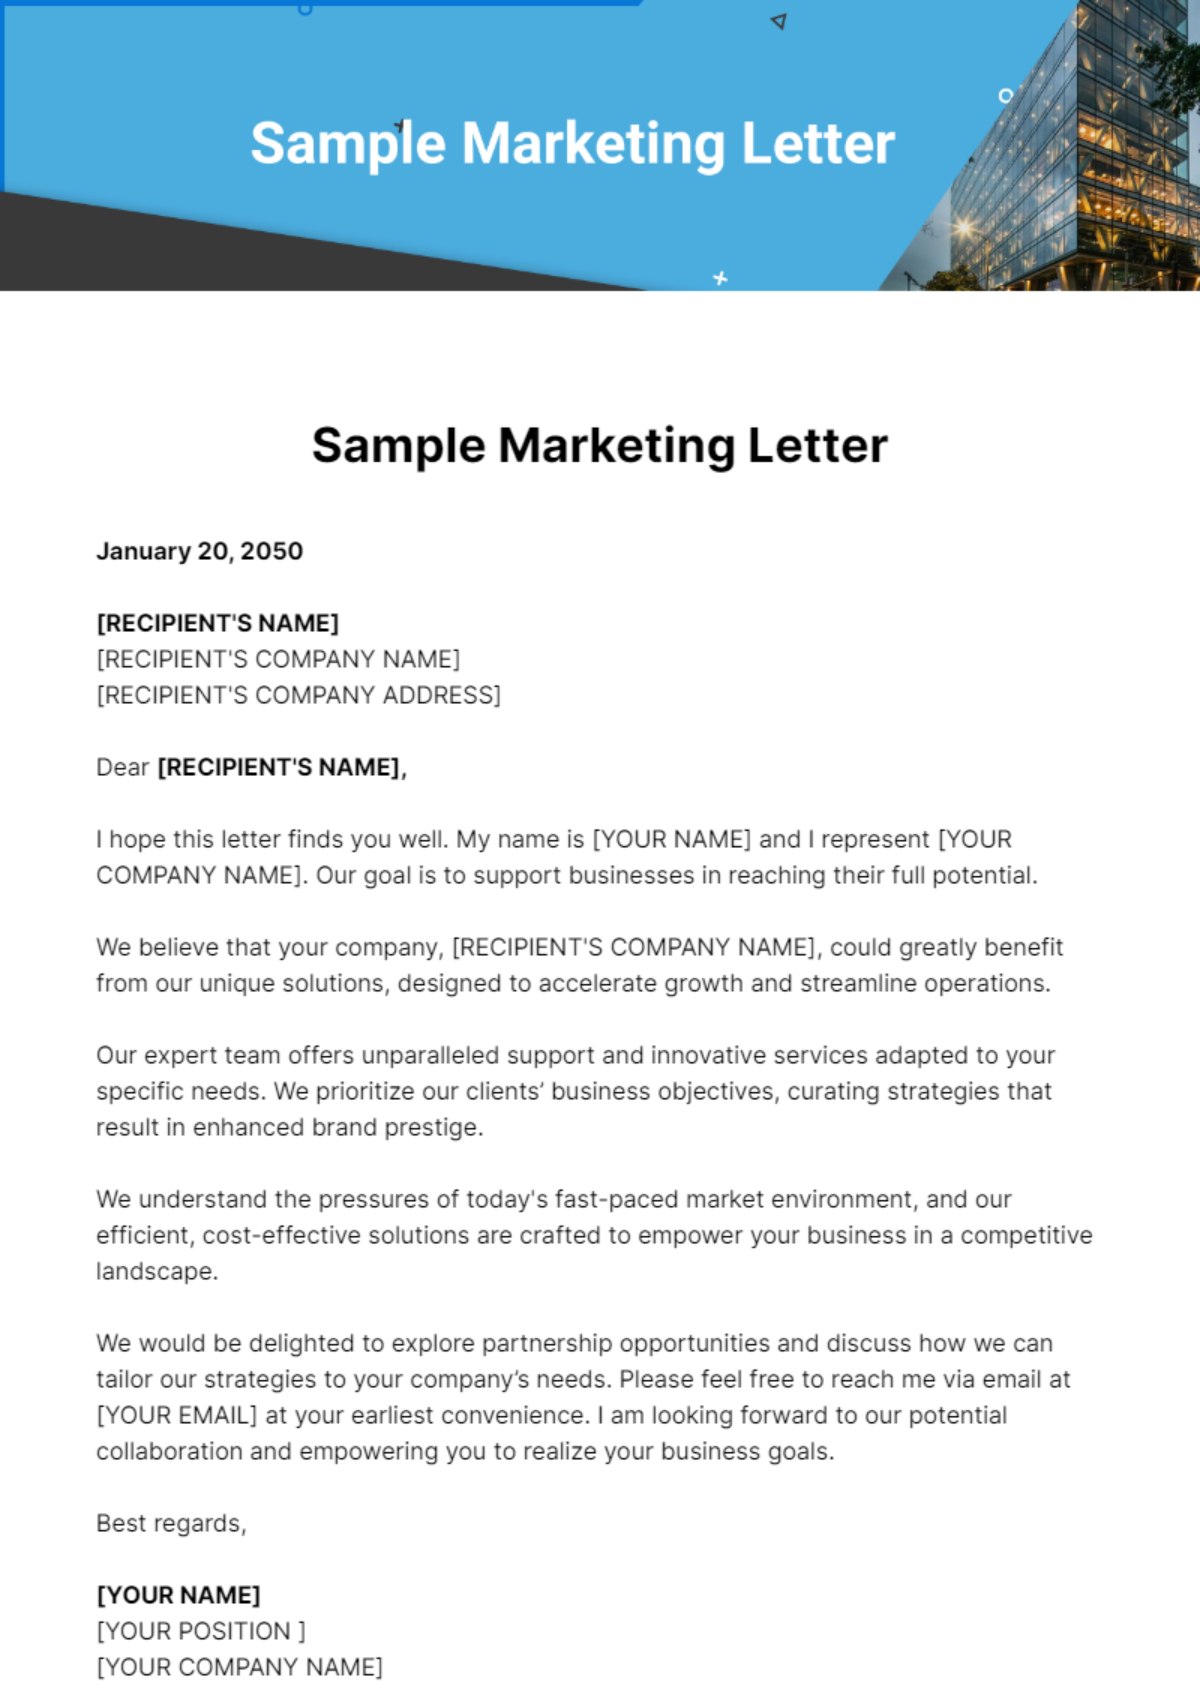 Free Sample Marketing Letter Template